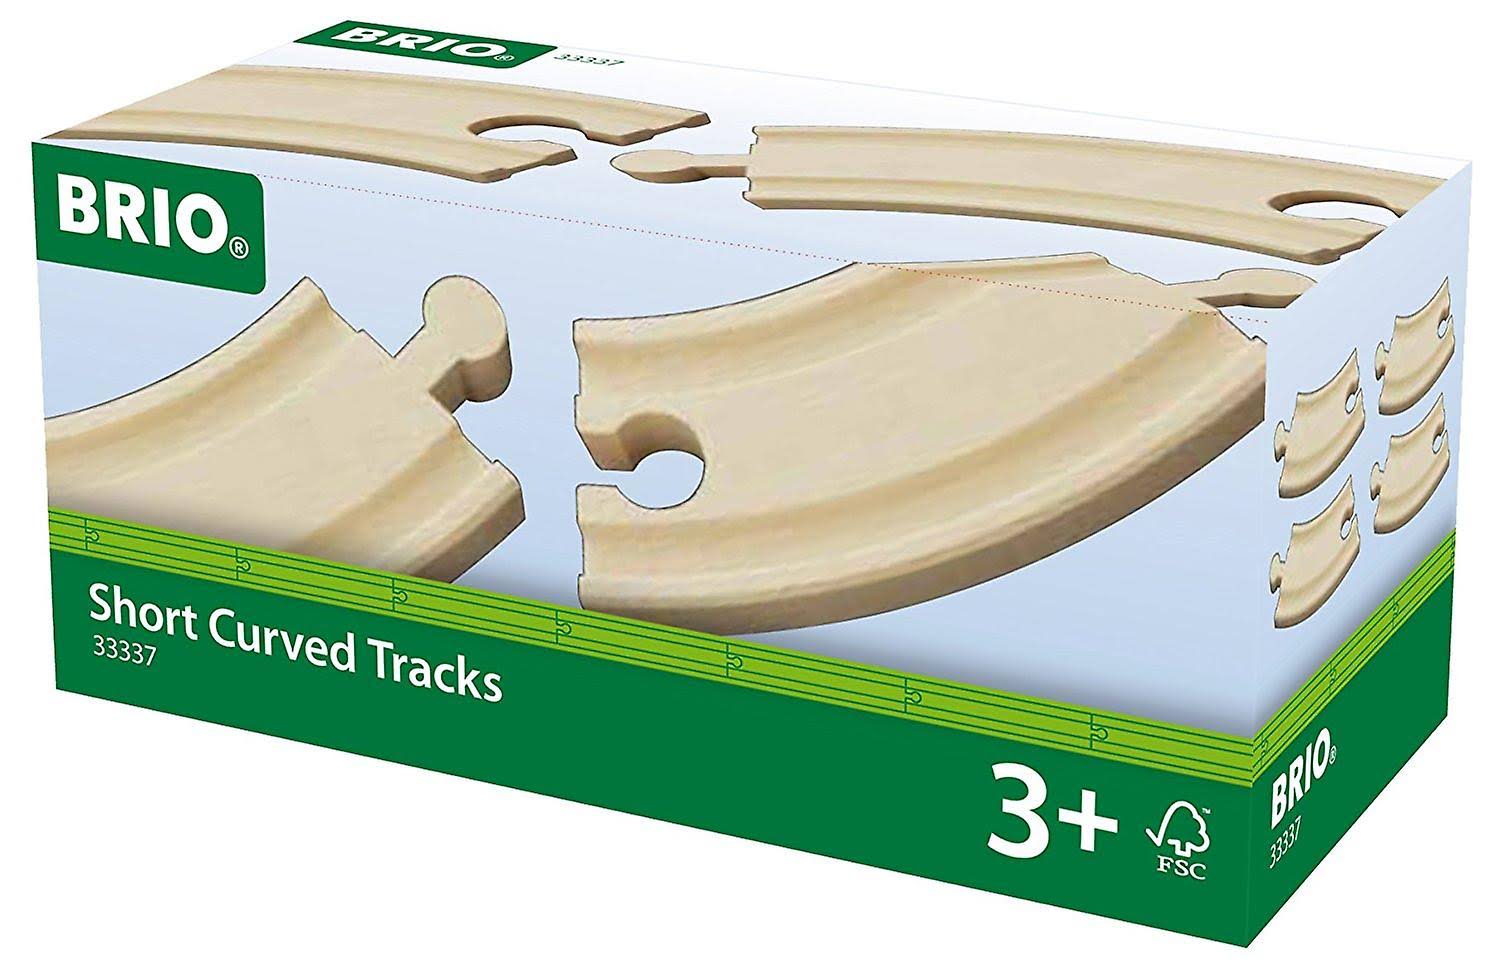 Brio 33337 Short Curved Tracks Toy